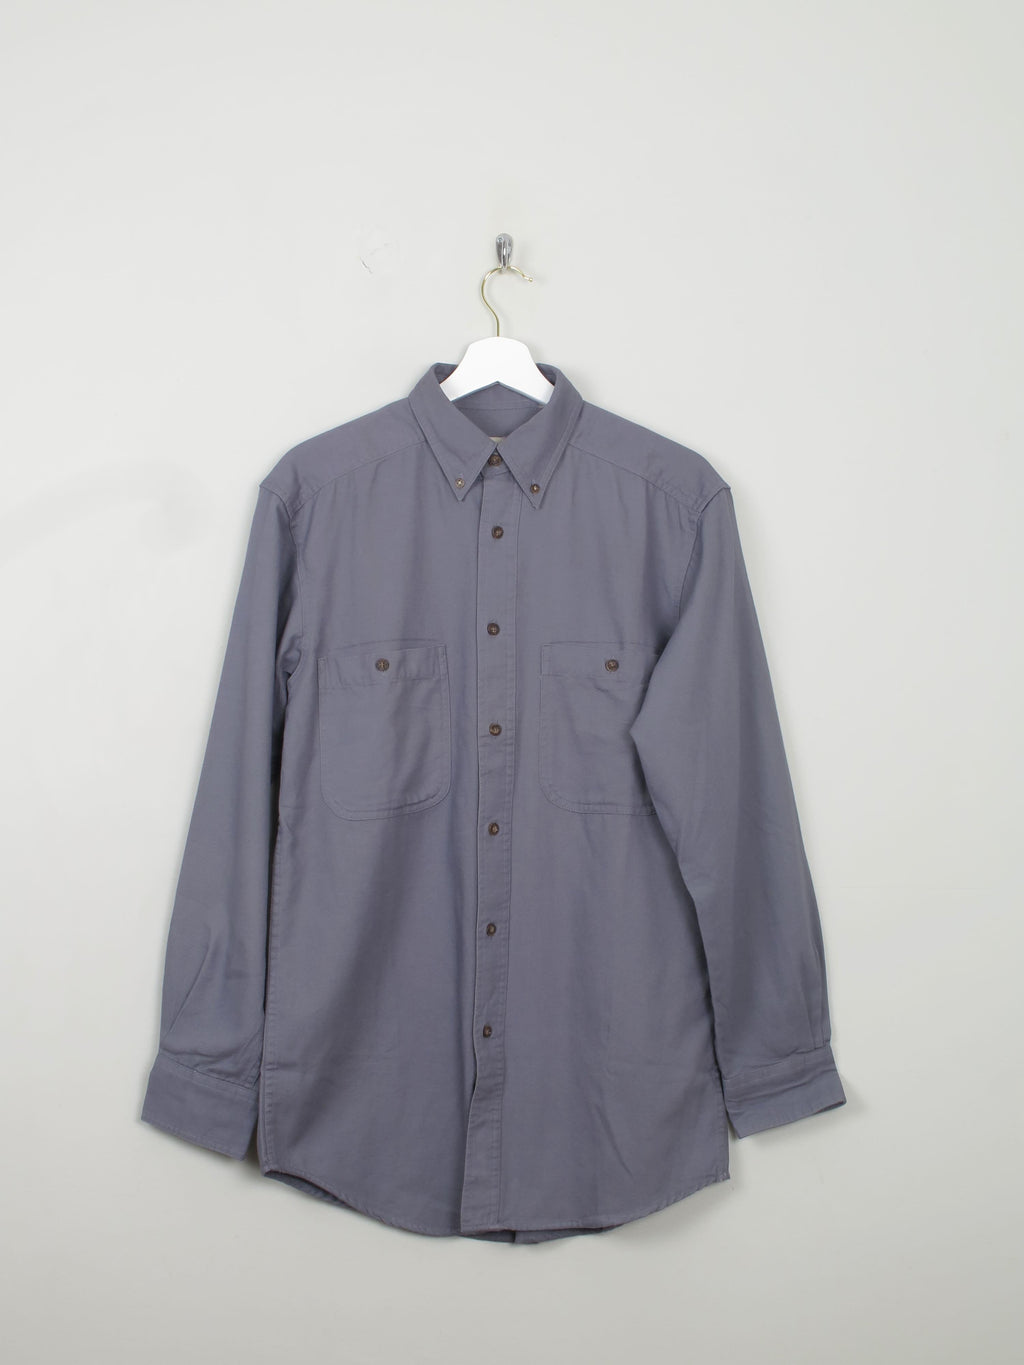 Men's Blue Vintage Work Style Shirt Unworn M - The Harlequin